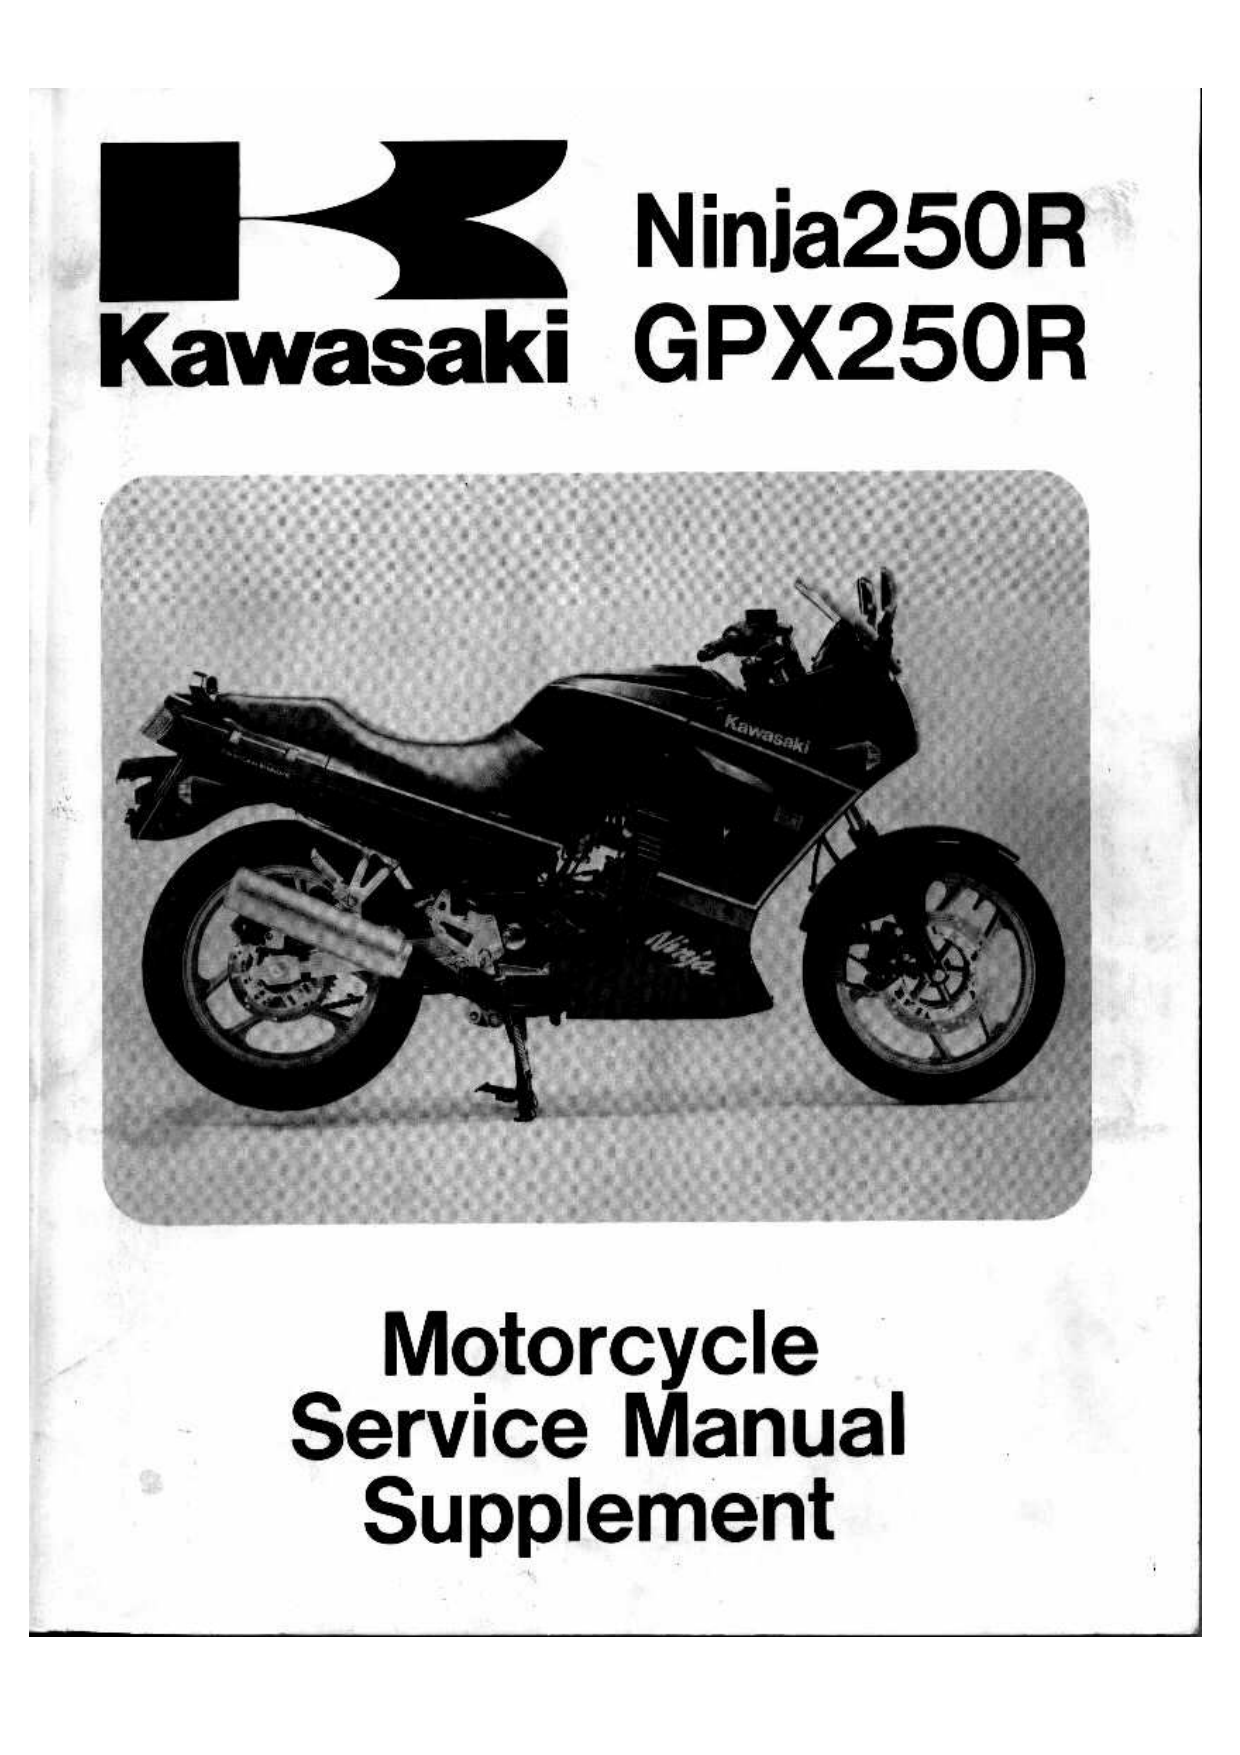 1988-2005 Kawasaki Ninja 250R, GPX250 service manual Preview image 6